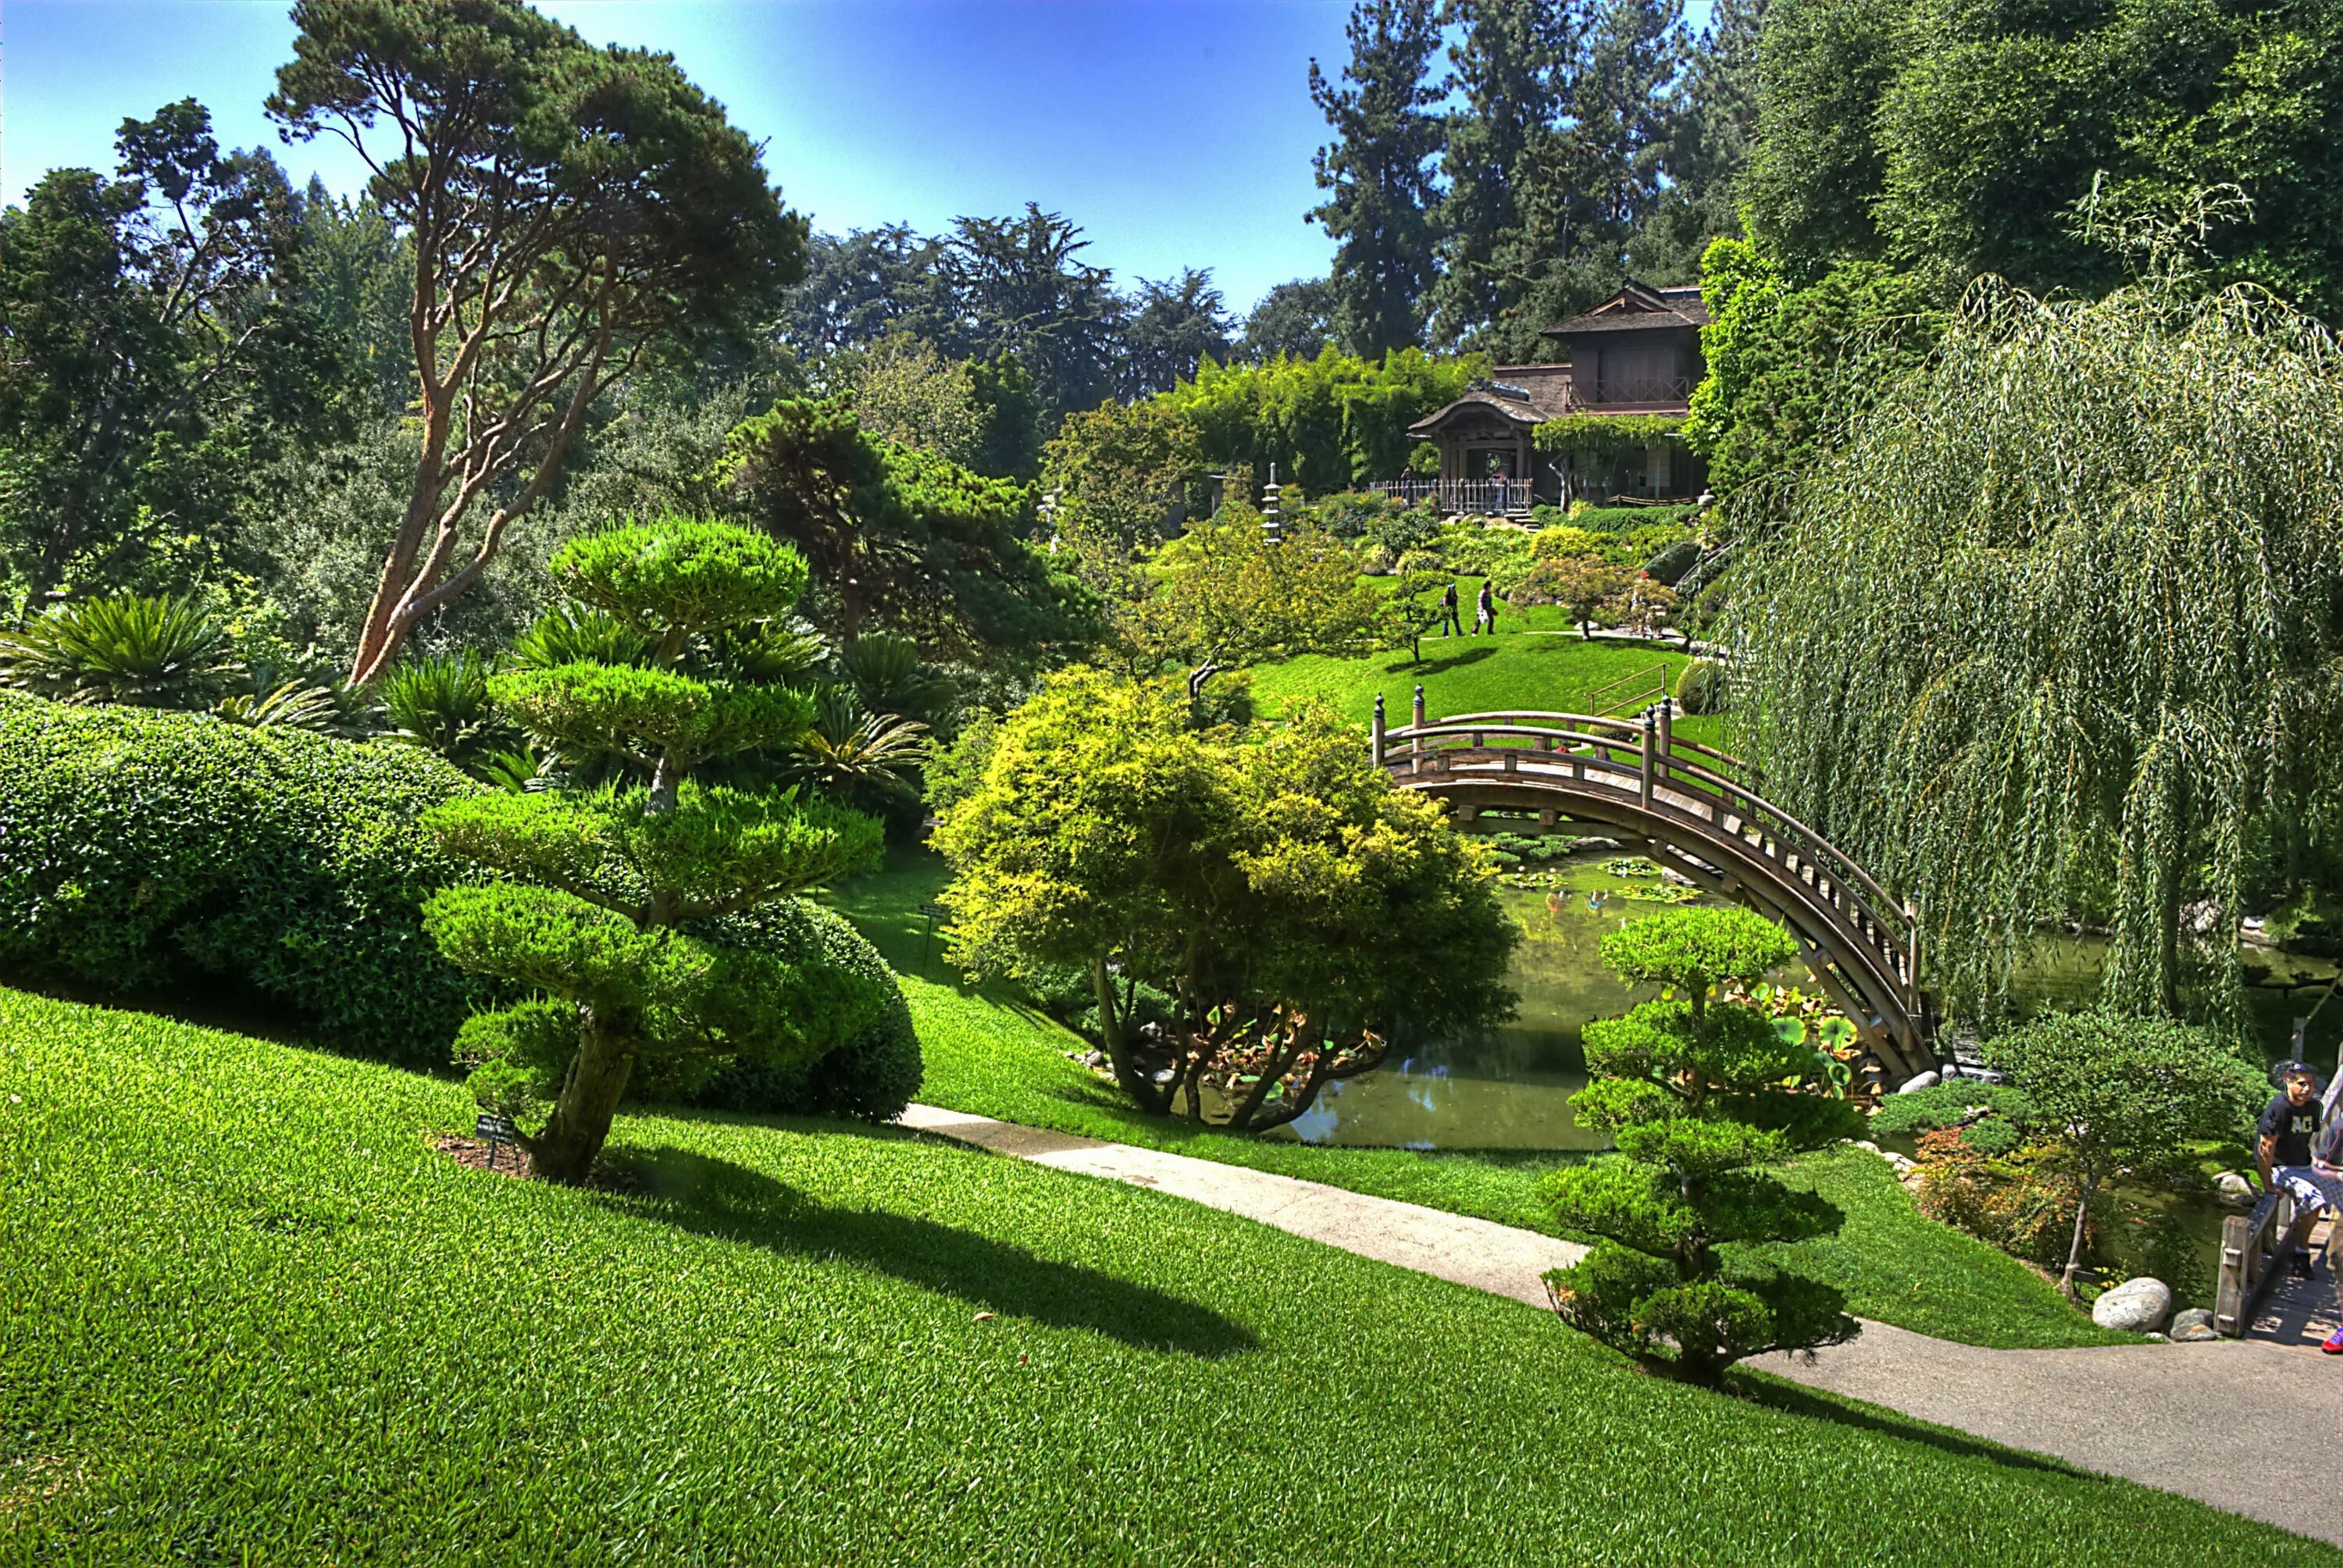 Петер Хесселс ландшафтный Архитектор. Коичи Курису ландшафтный дизайнер его сады. Холмистый сад Япония. Хелен парк+ ландшафт. Название природного ландшафта